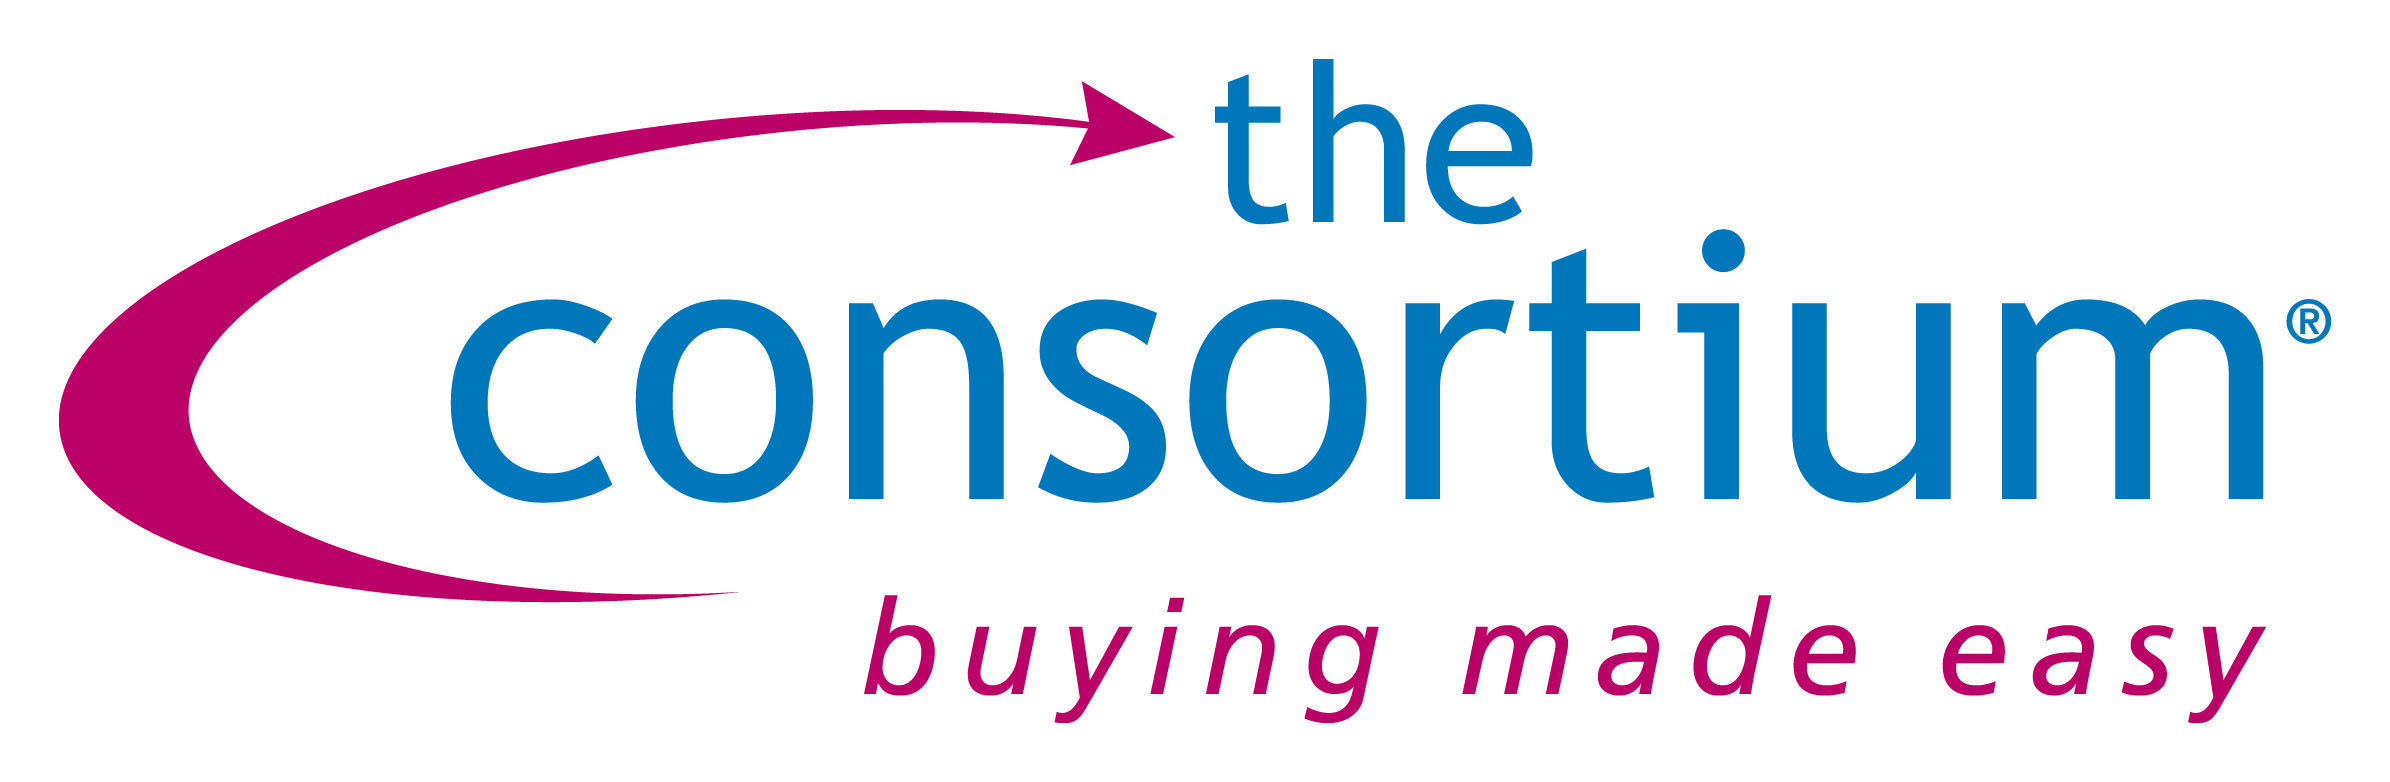 Consortium for Purchasing & Distribution Ltd